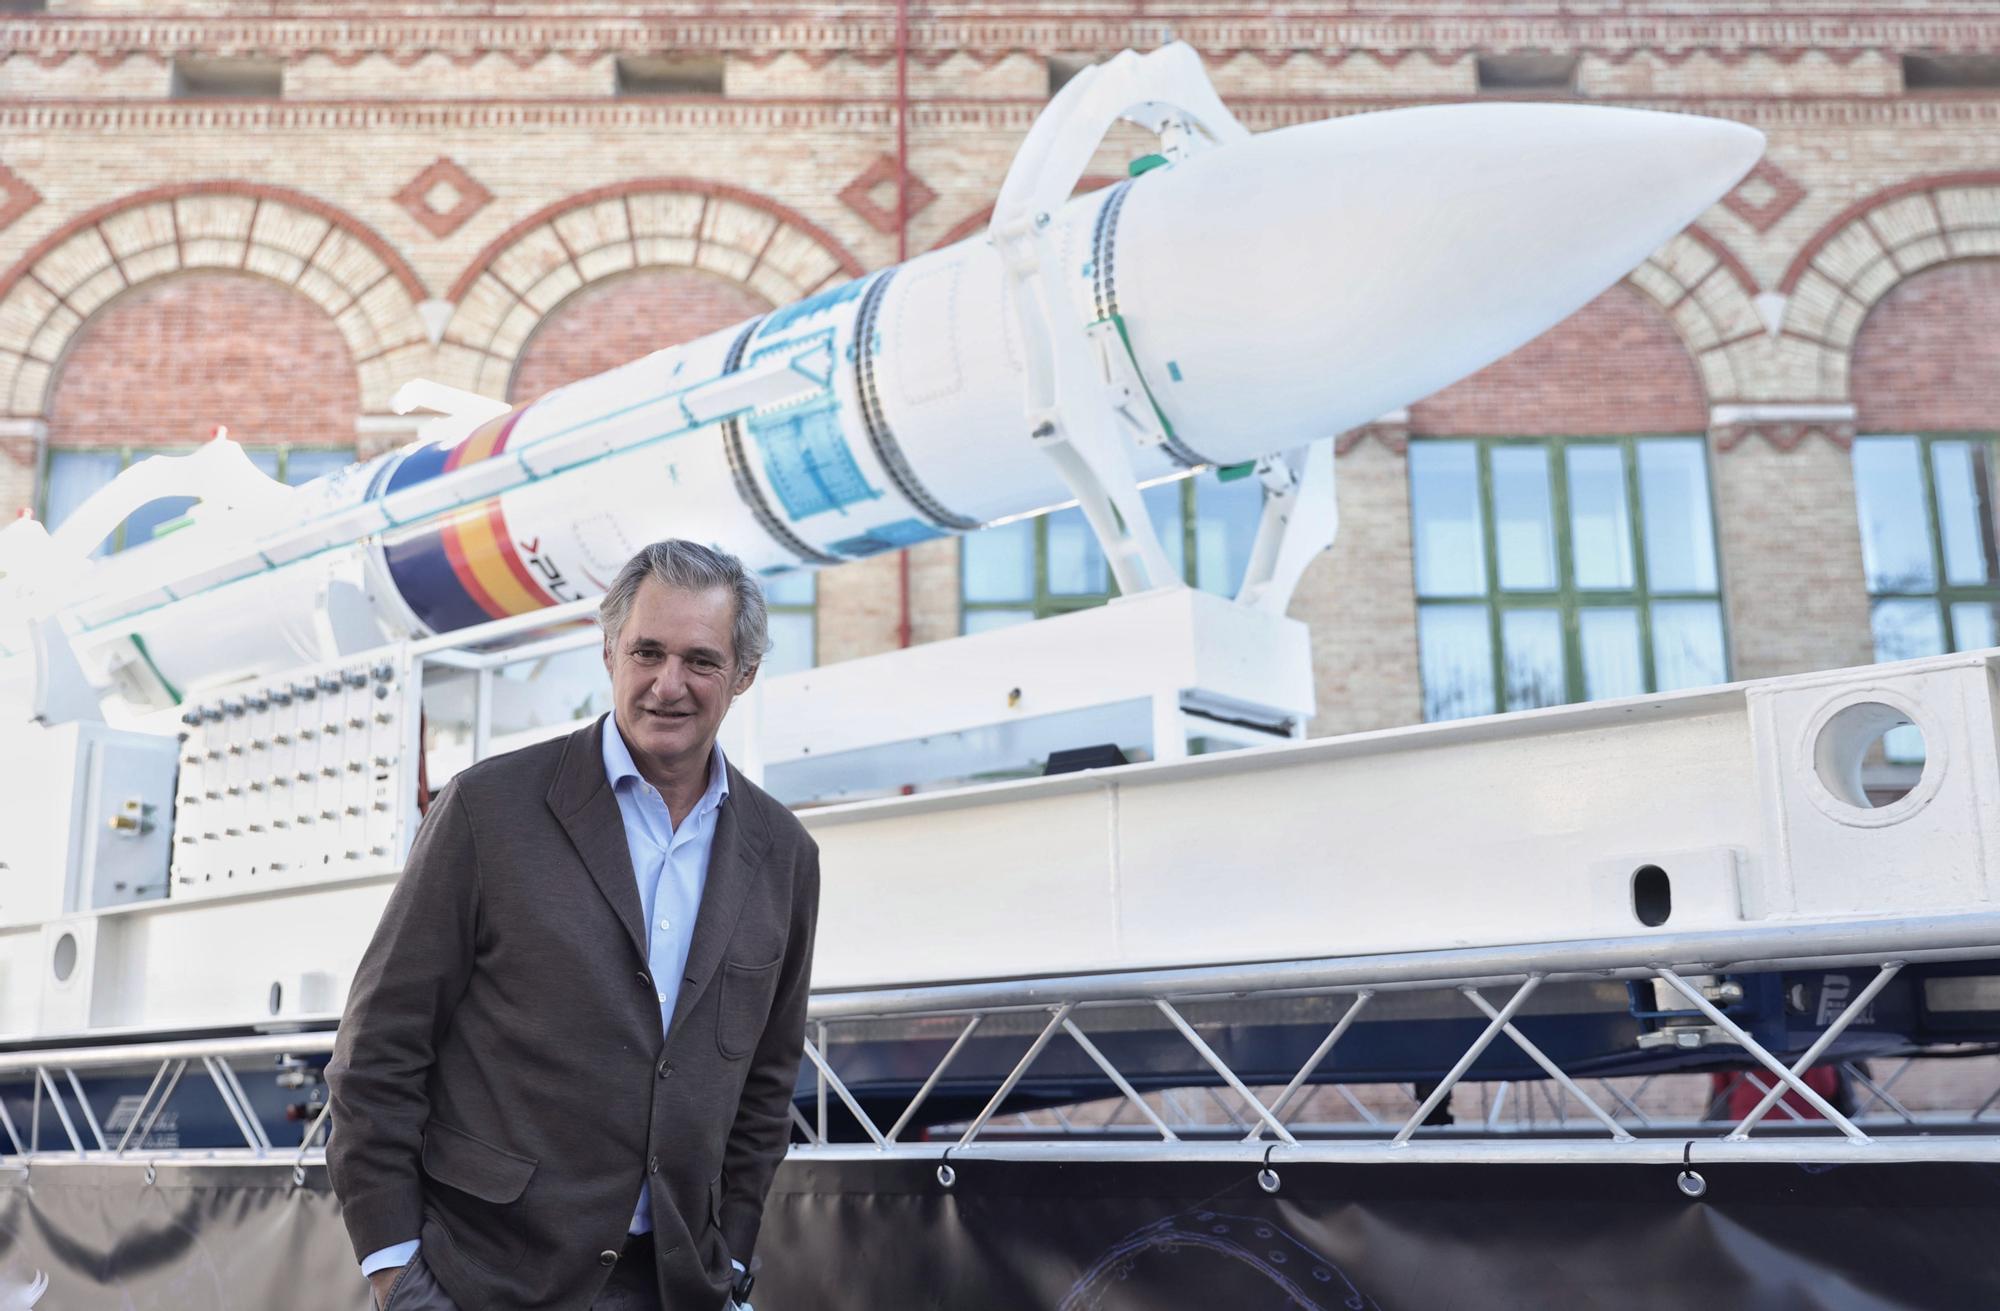 Una empresa de Elx presenta el primer cohete espacial español